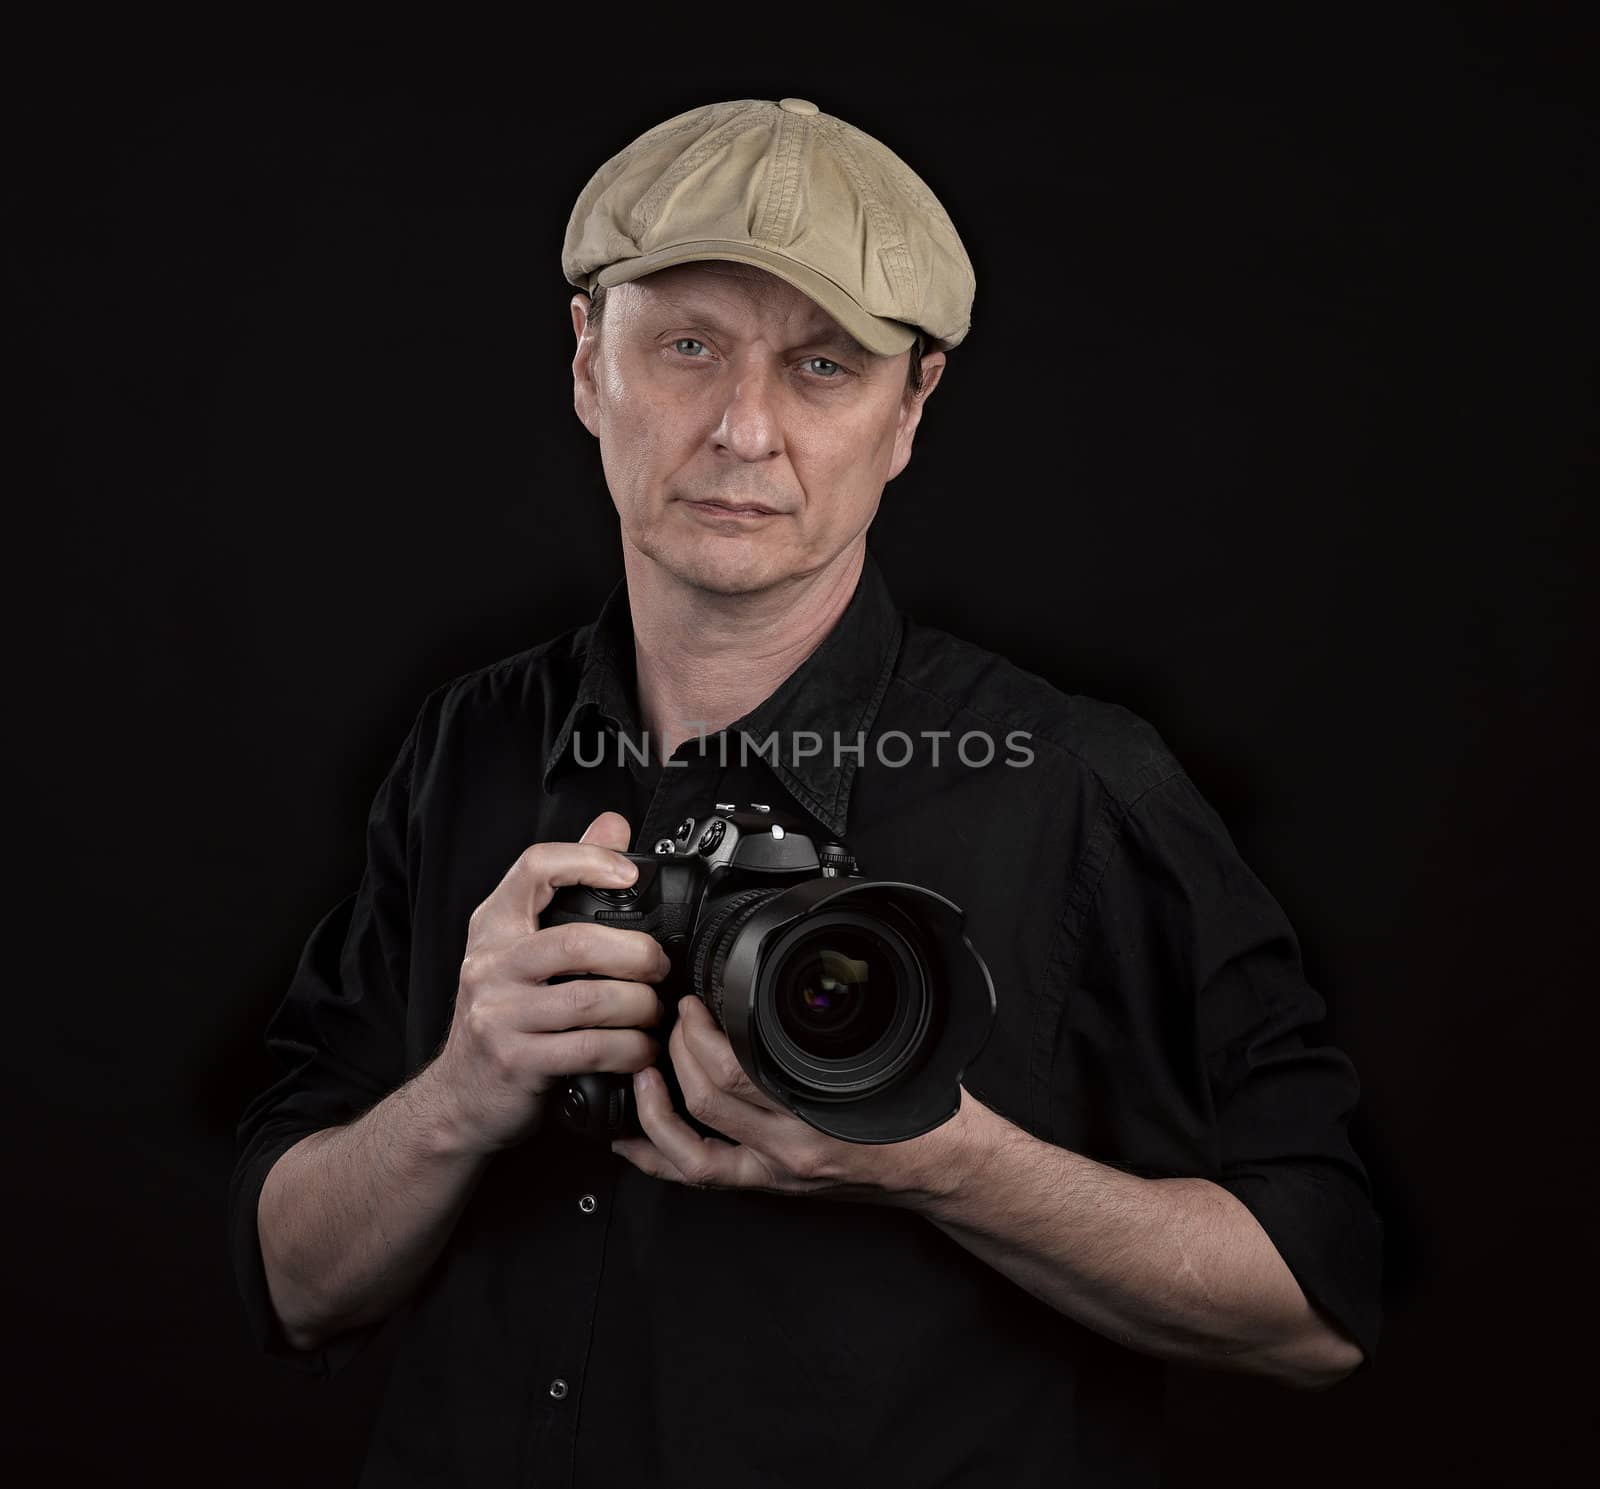 Portrait of a Photographer on black